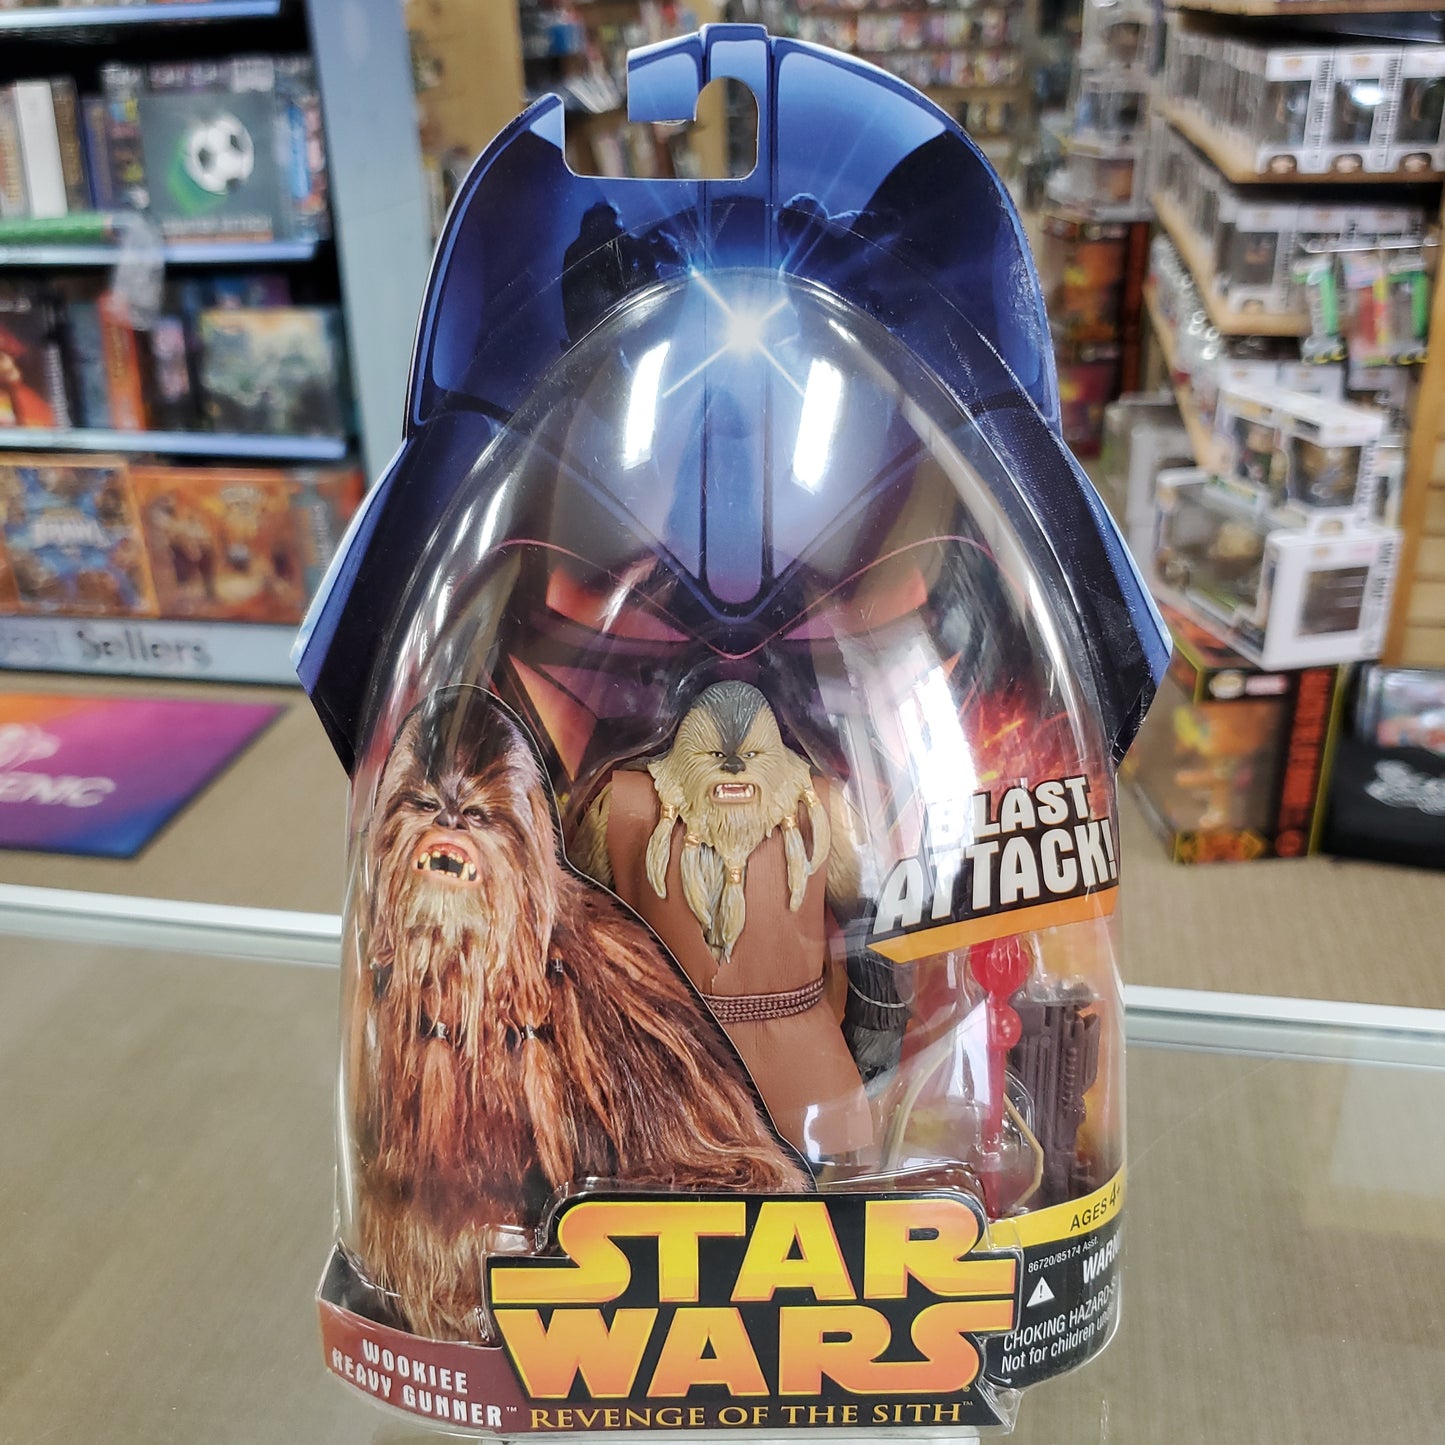 Wookiee Heavy Gunner (Blast Attack) - Star Wars Revenge of the Sith Action Figure